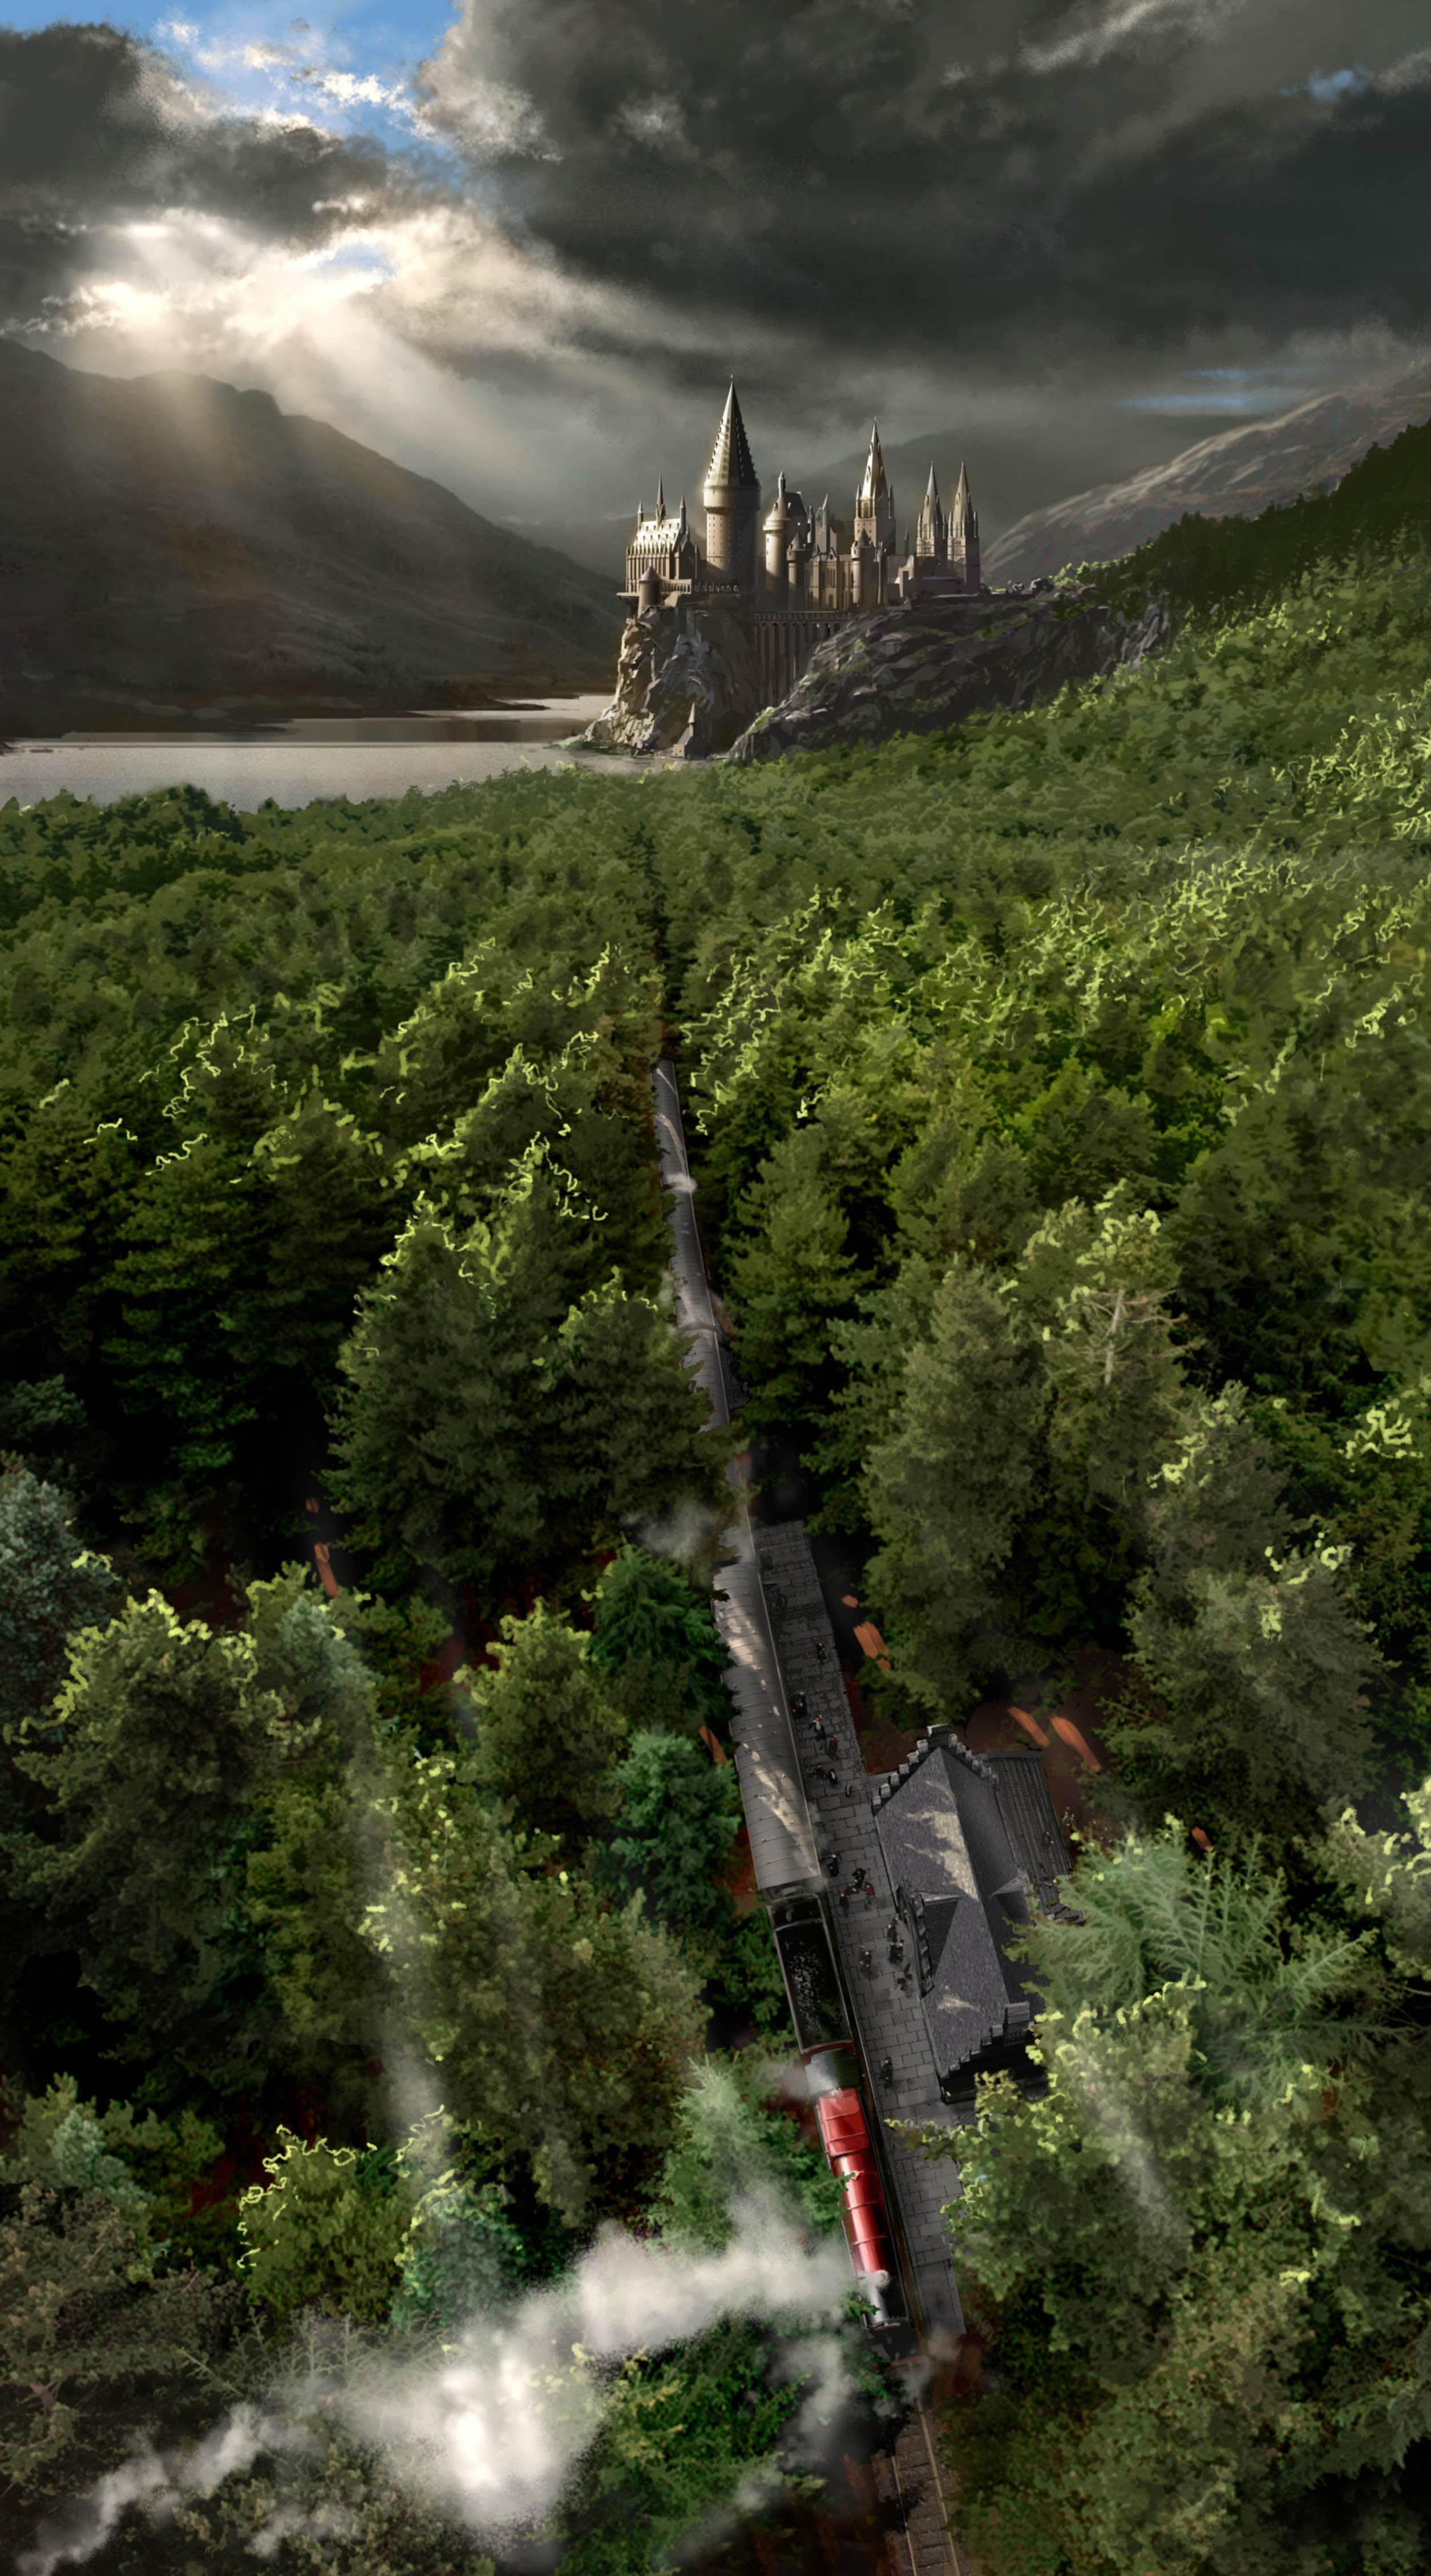 An illustration of Hogwarts and Hogsmead station 